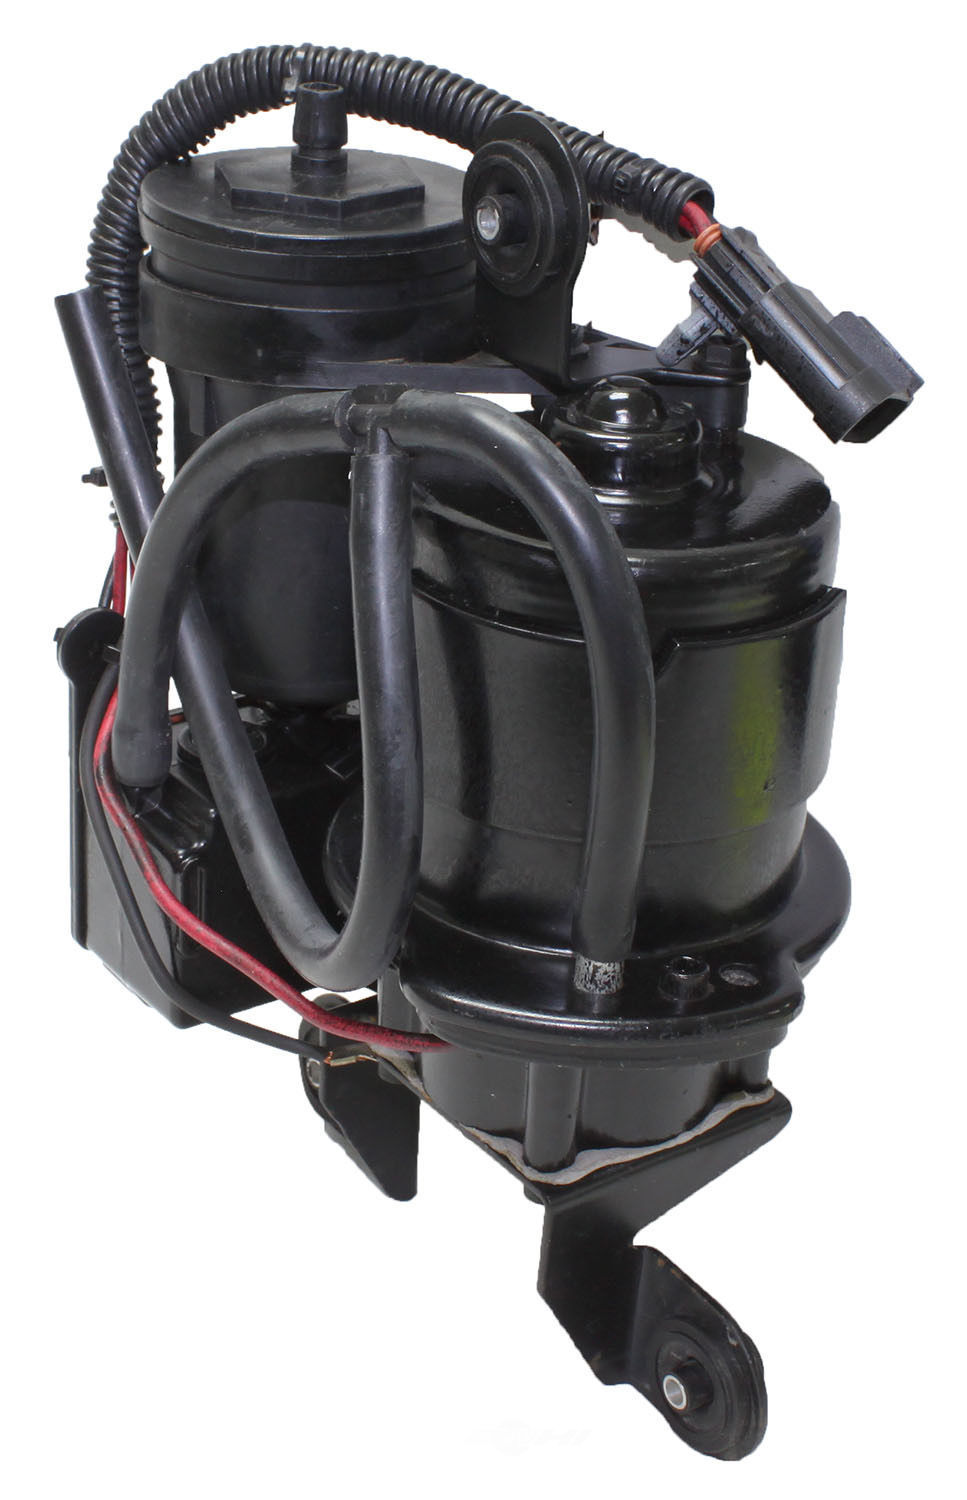 WESTAR - Suspension Air Compressor / Dryer Vibration Isolator Kit - WSR CD-7718